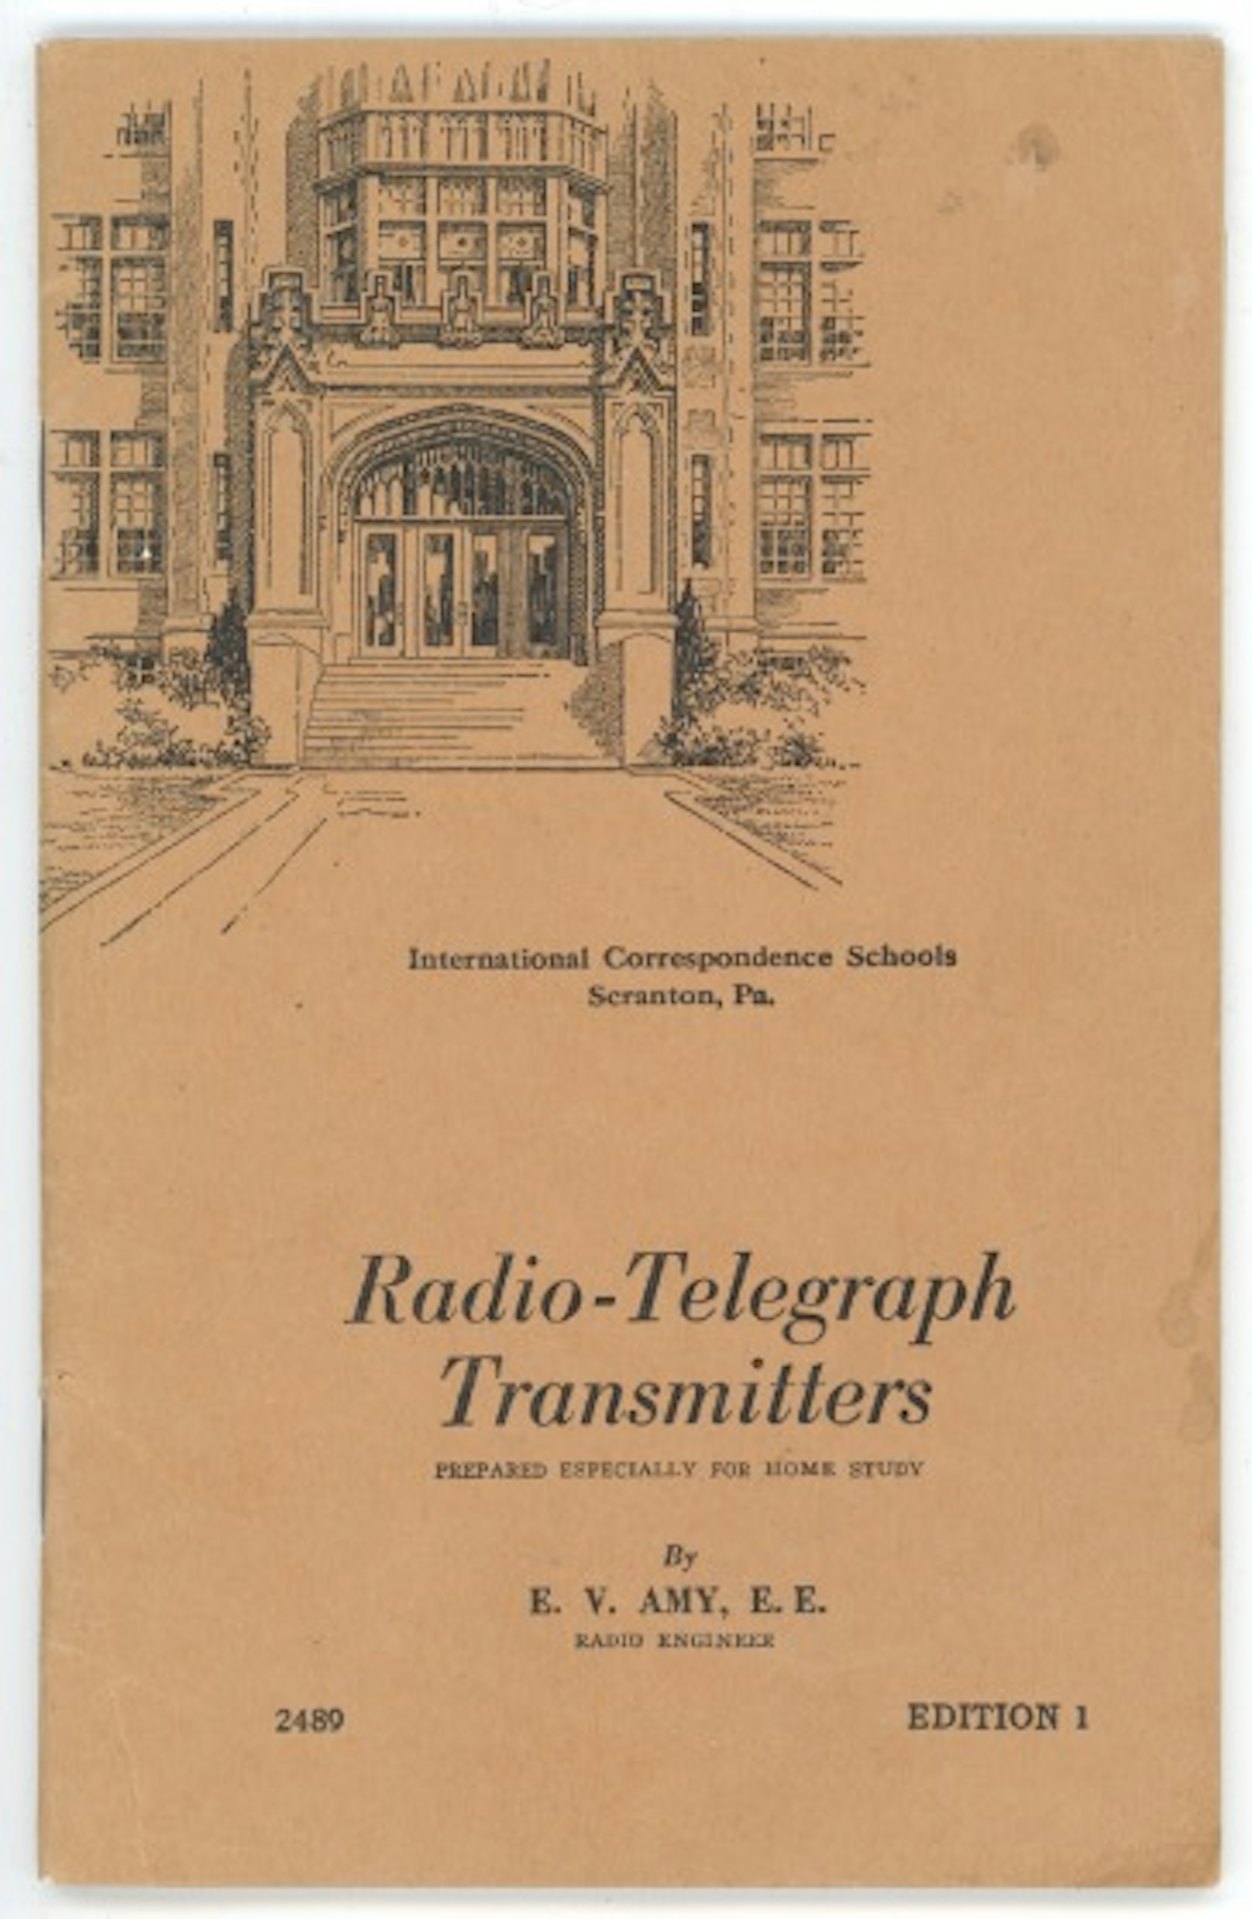 Radio-Telegraph Transmitters